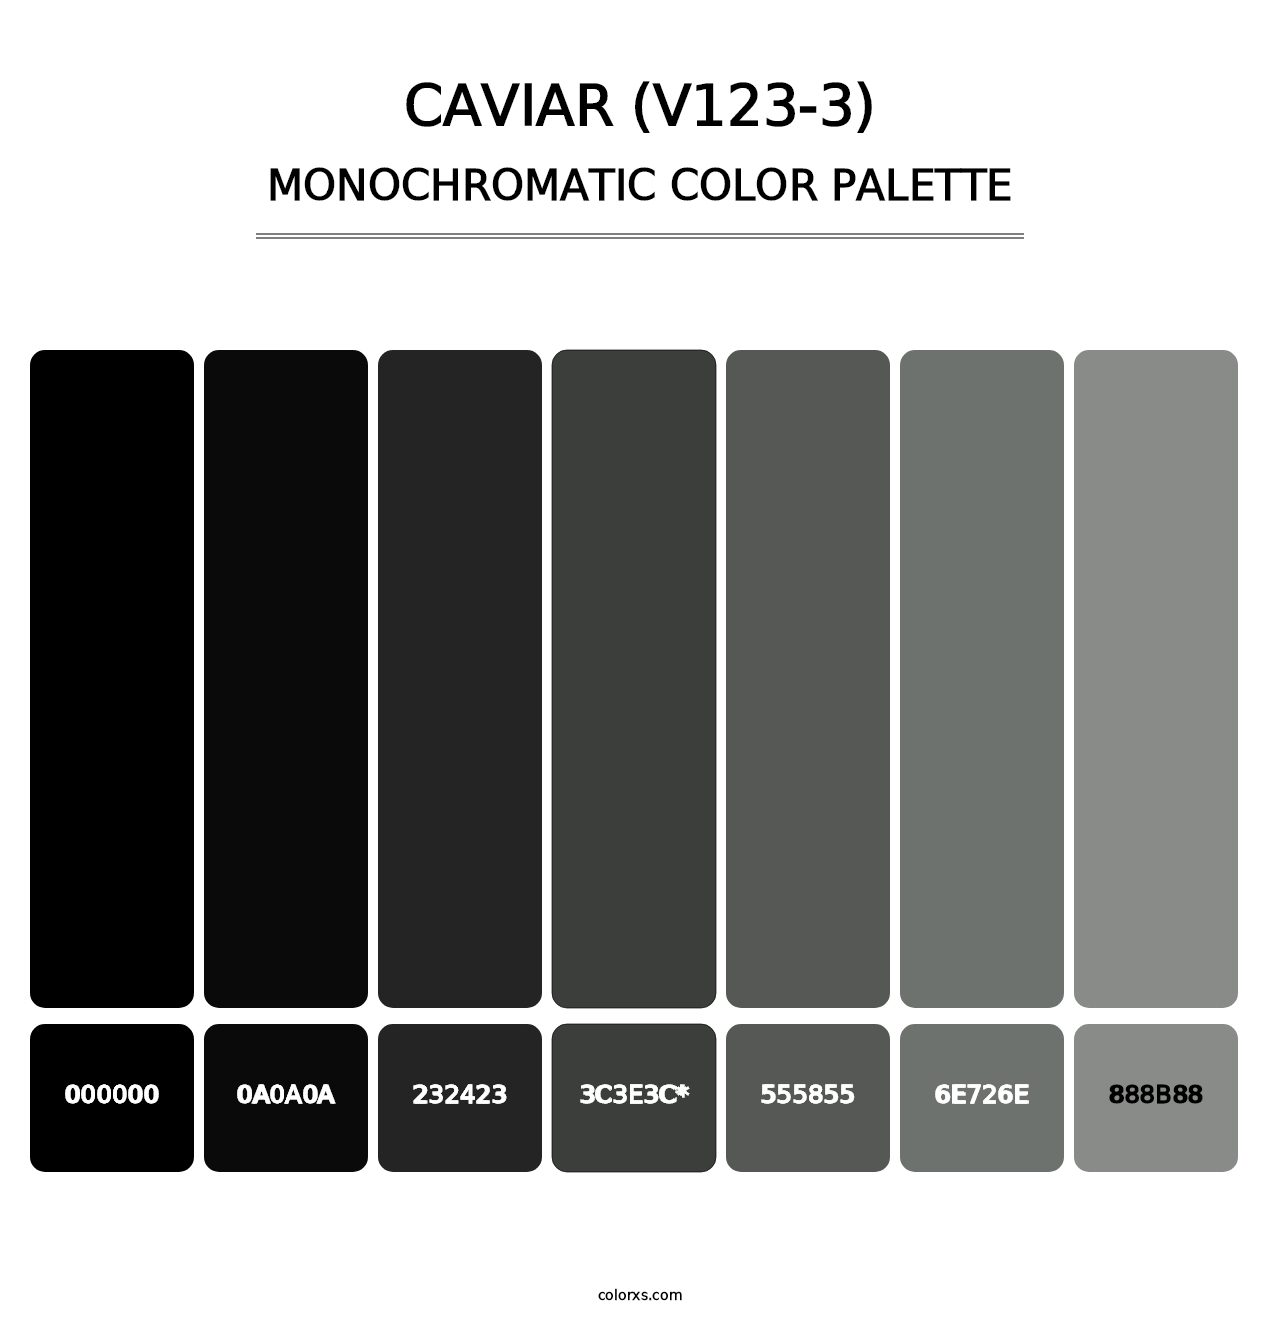 Caviar (V123-3) - Monochromatic Color Palette